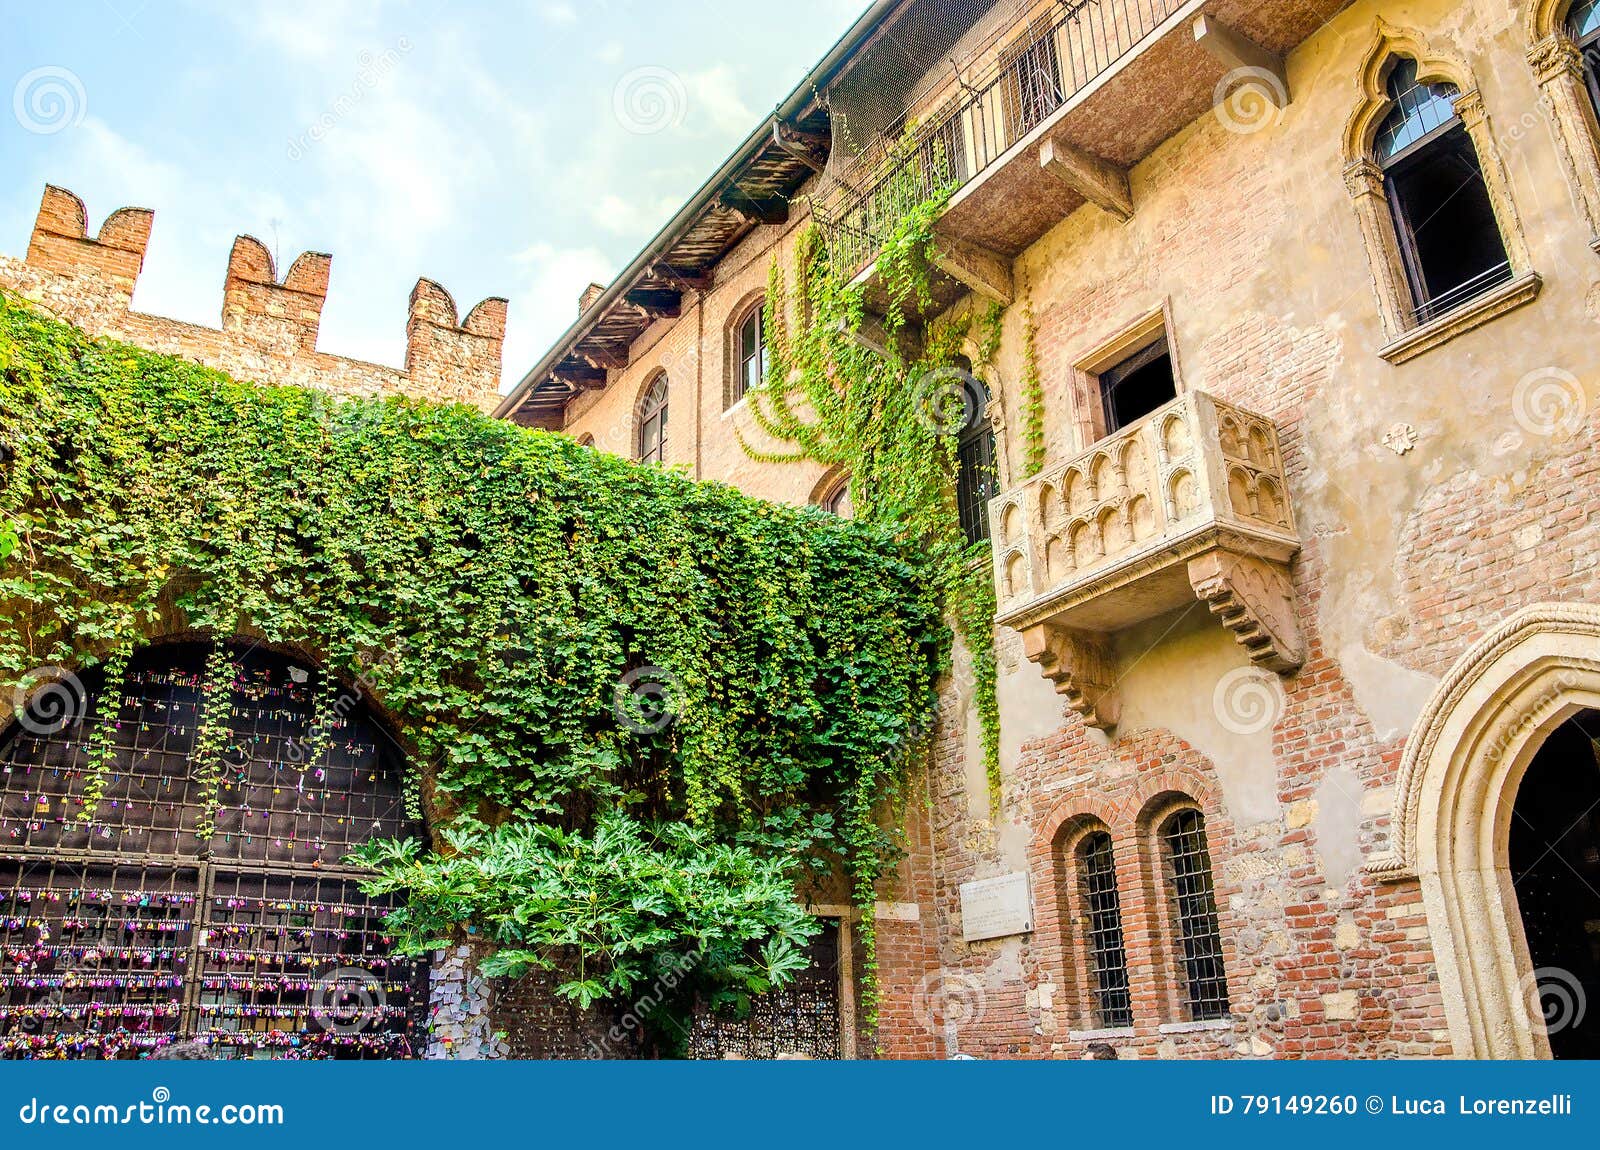 the original romeo and juliet balcony located in verona, italy